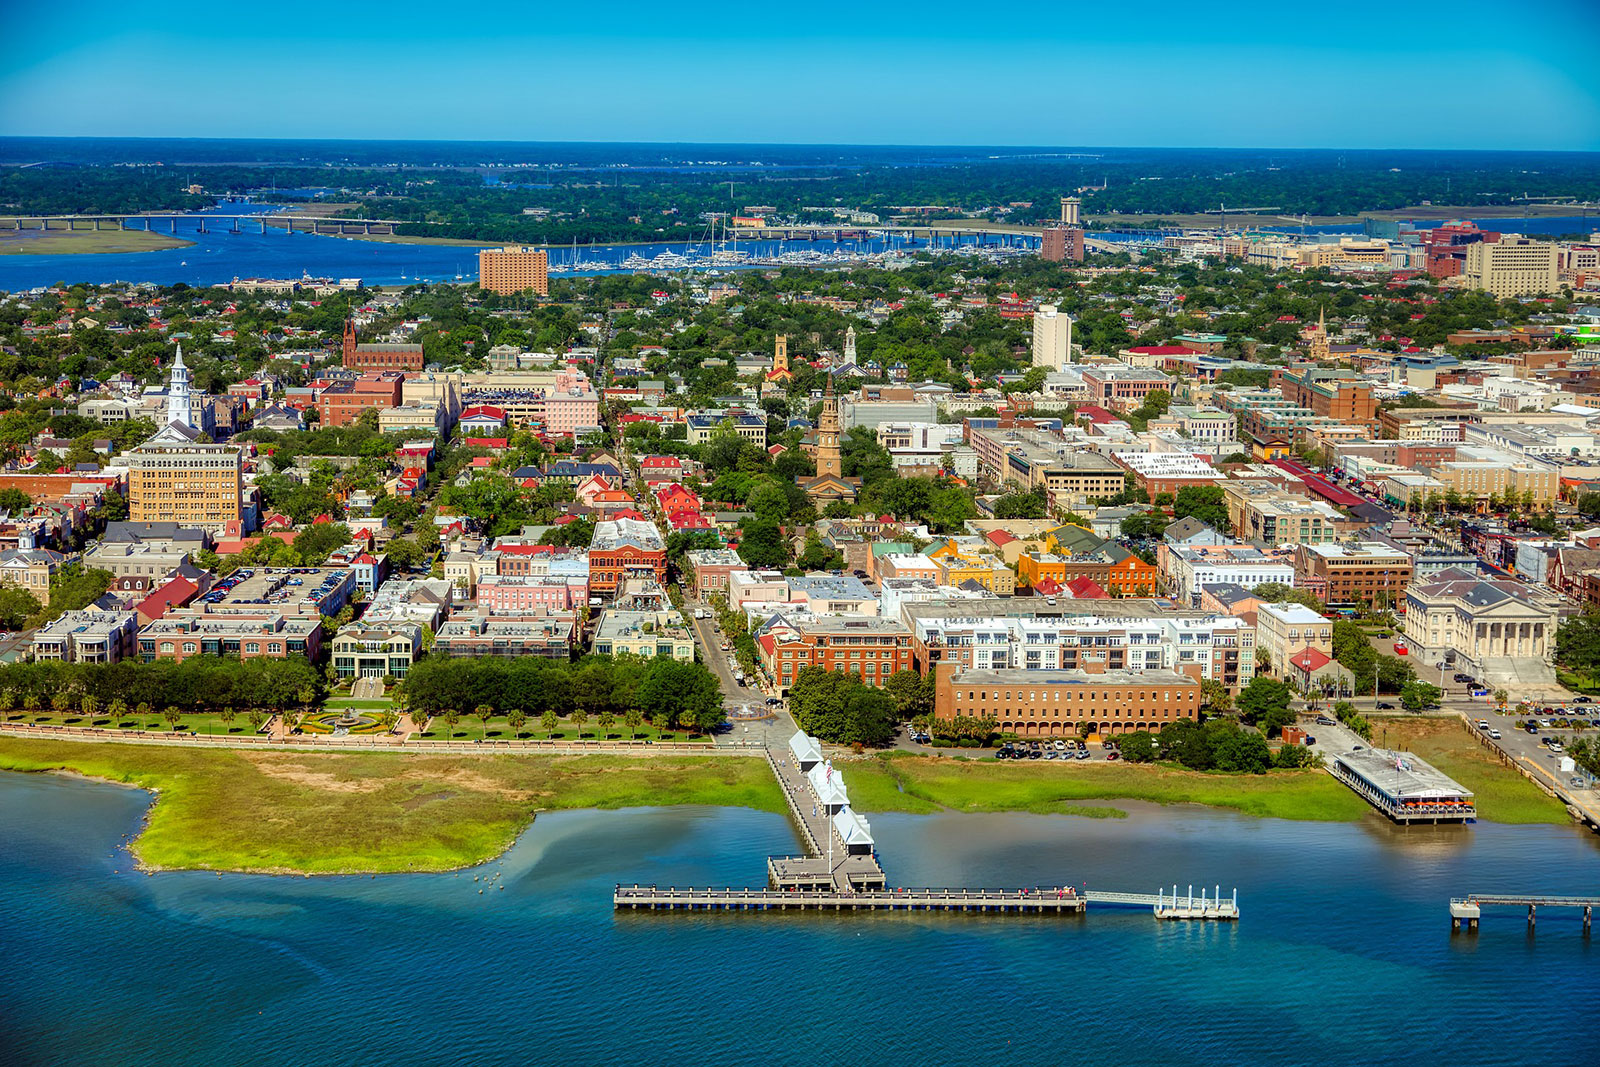 Charleston, South Carolina – the US's surprise tech start-up city